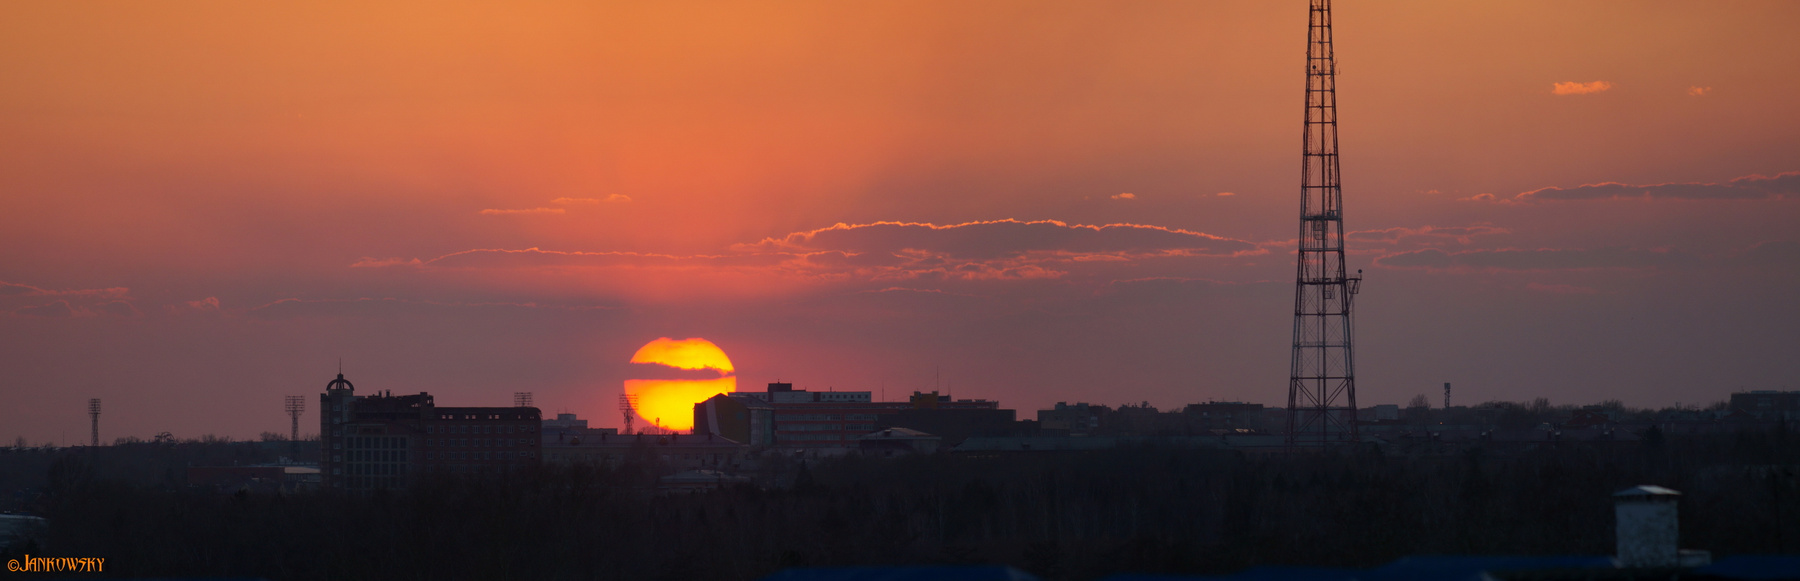 Пекло  26.04.21 омск панорама закат пекло солнце canon fd 300mm f2.8l